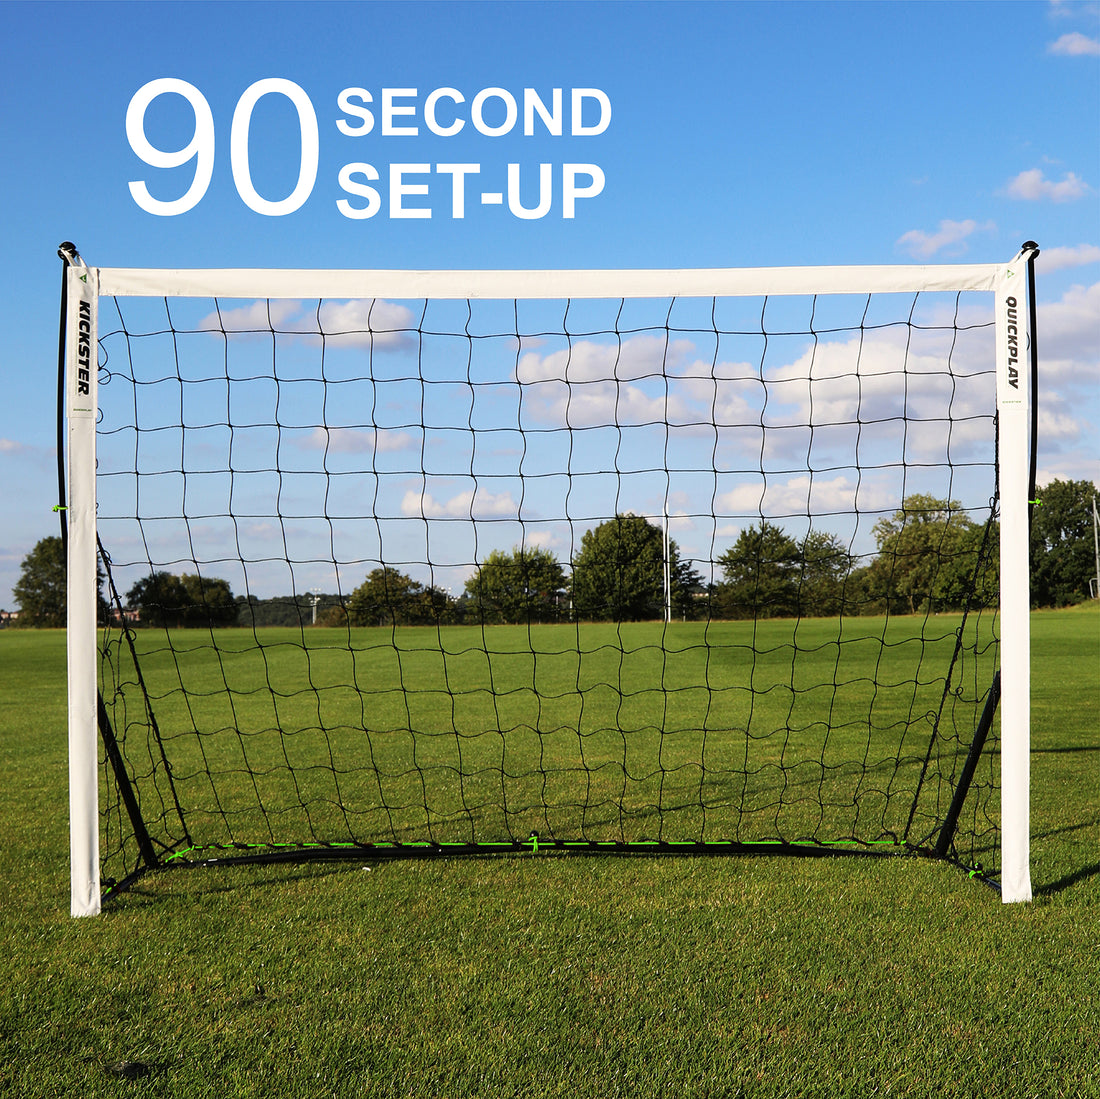 KICKSTER Portable Soccer Goal 6x4'